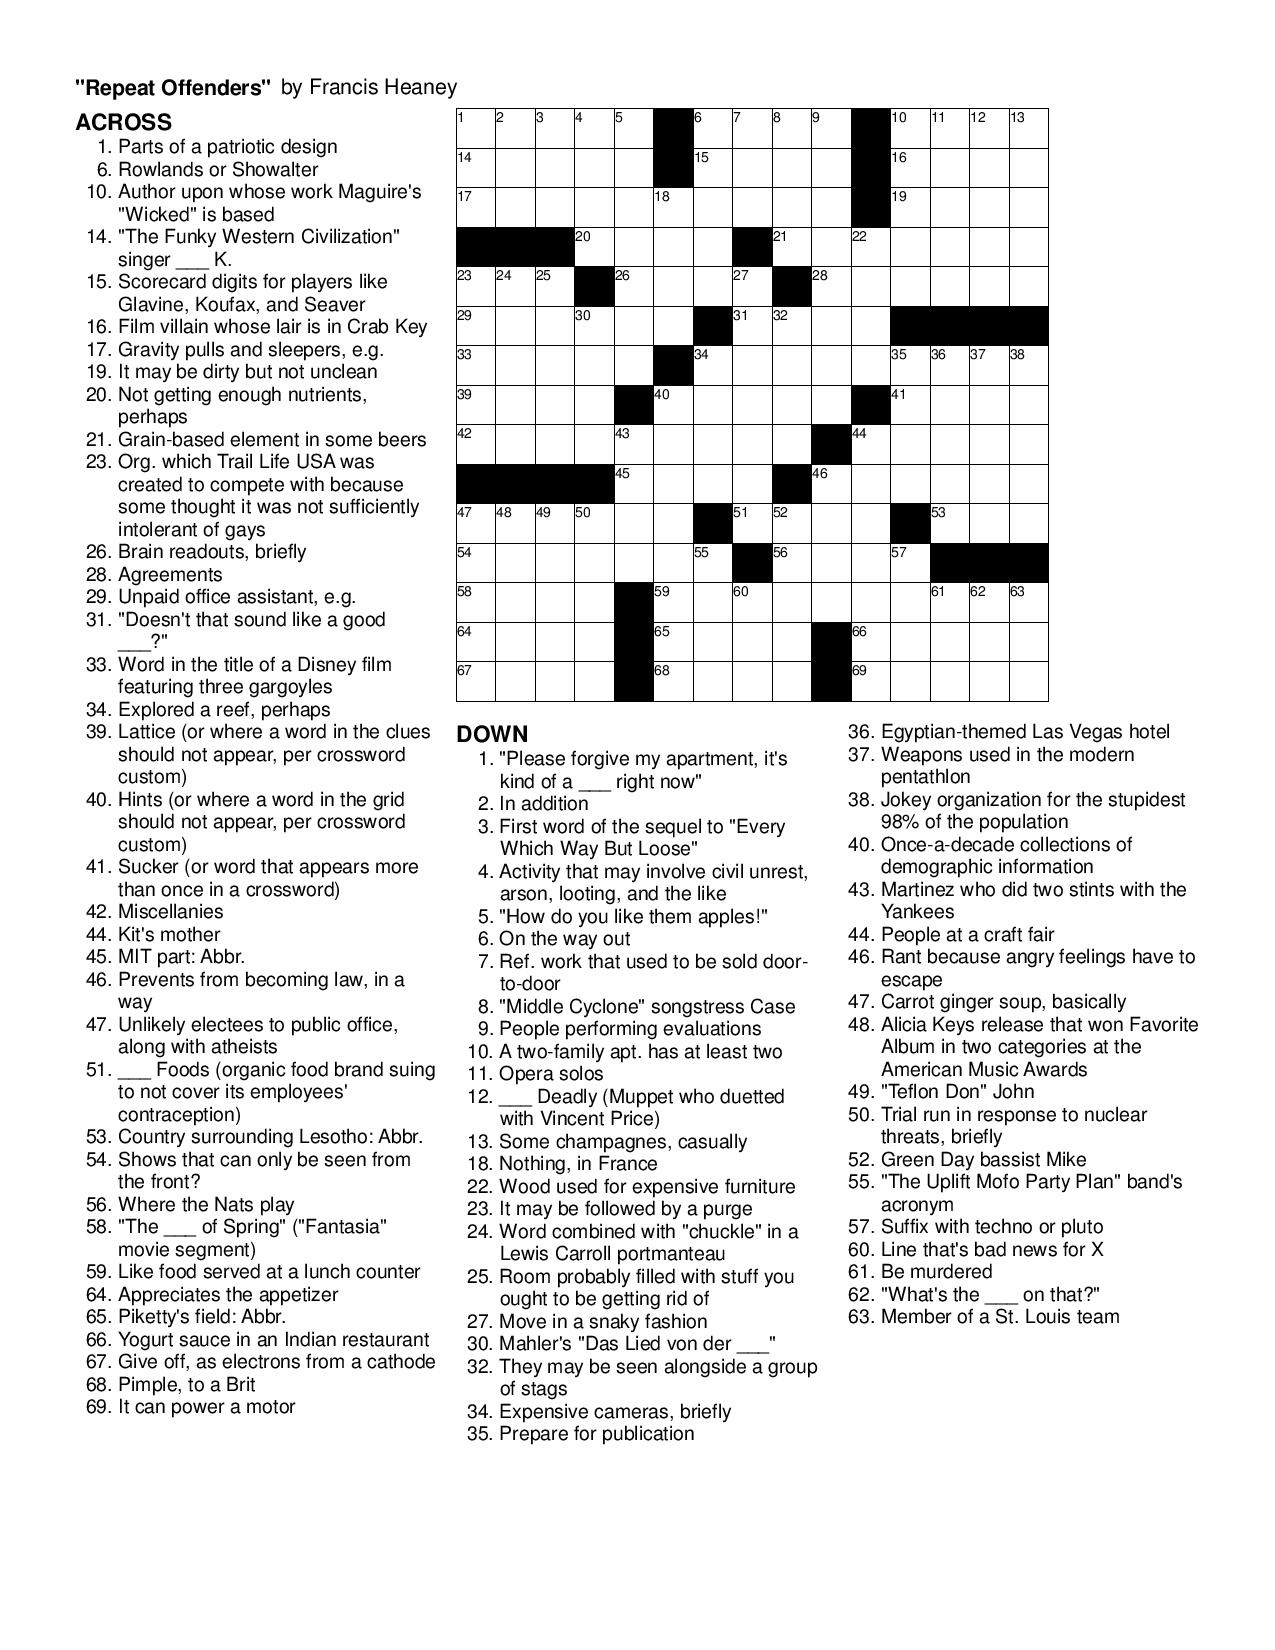 Merl Reagle's Sunday Crossword Free Printable Free Printable